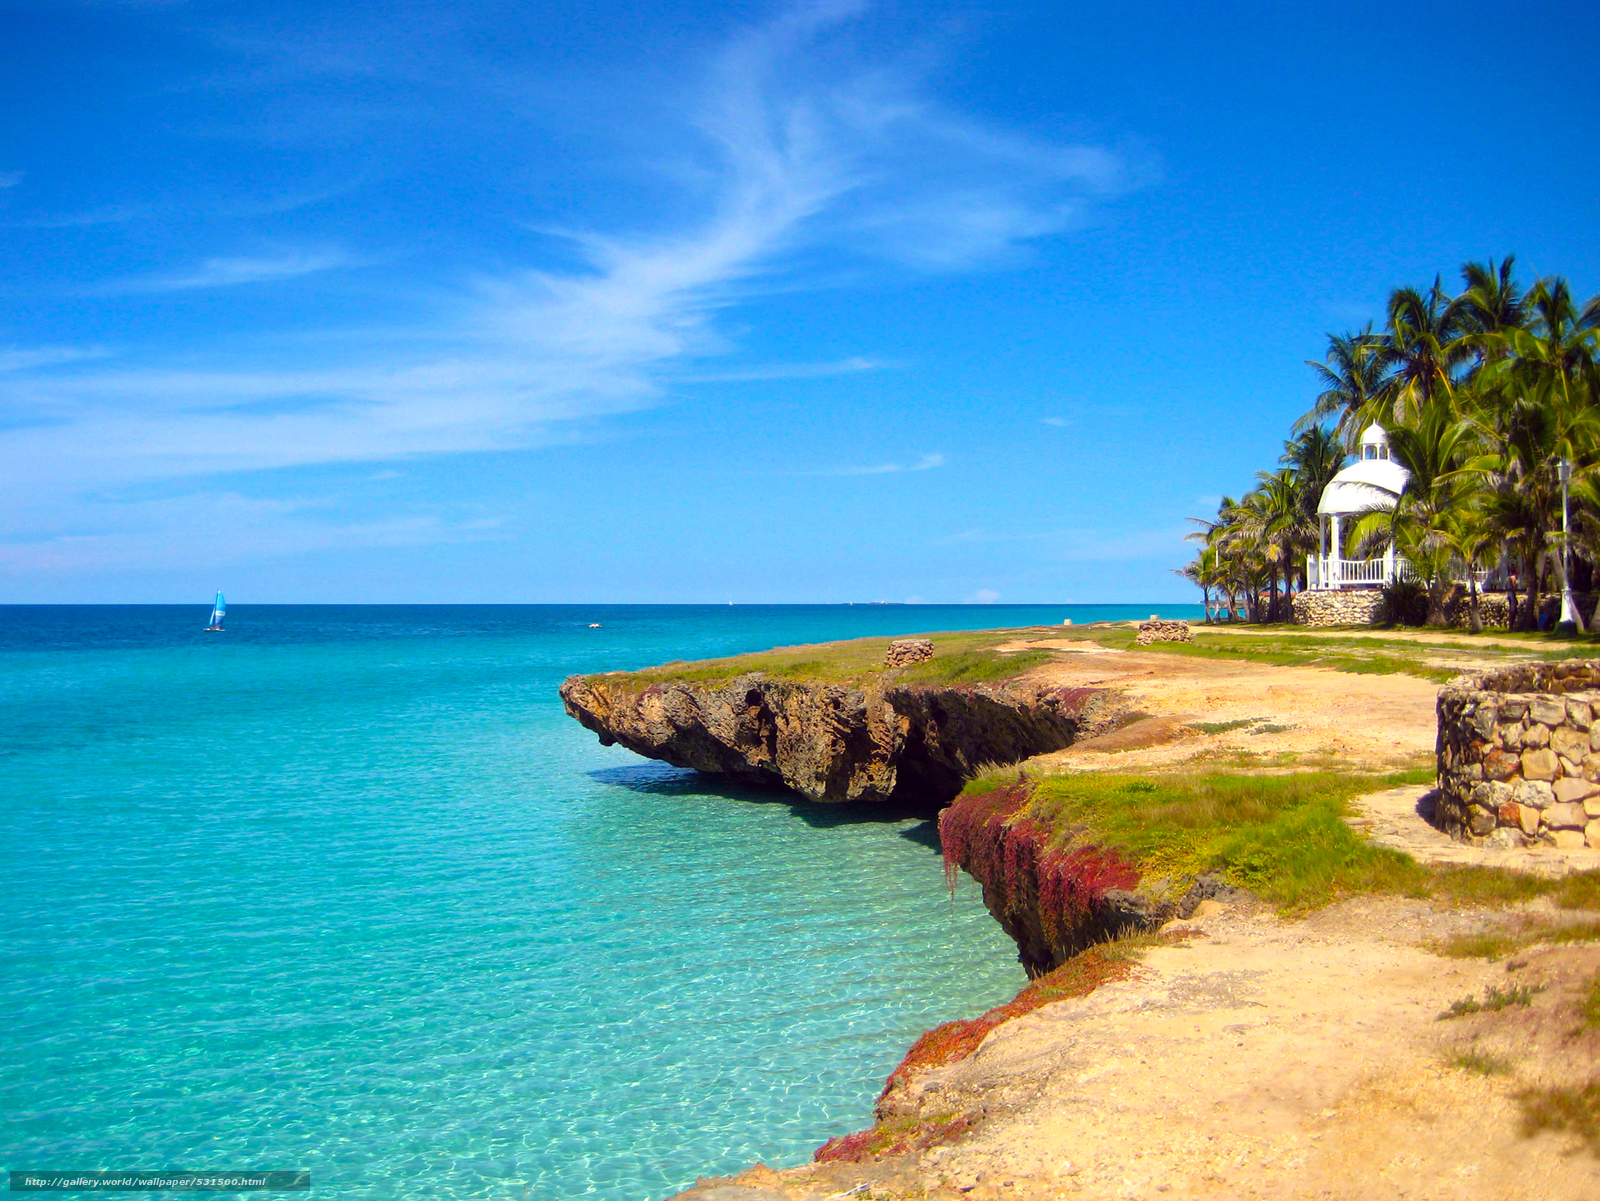 Download wallpaper caribbean beach Hotel free desktop wallpaper in